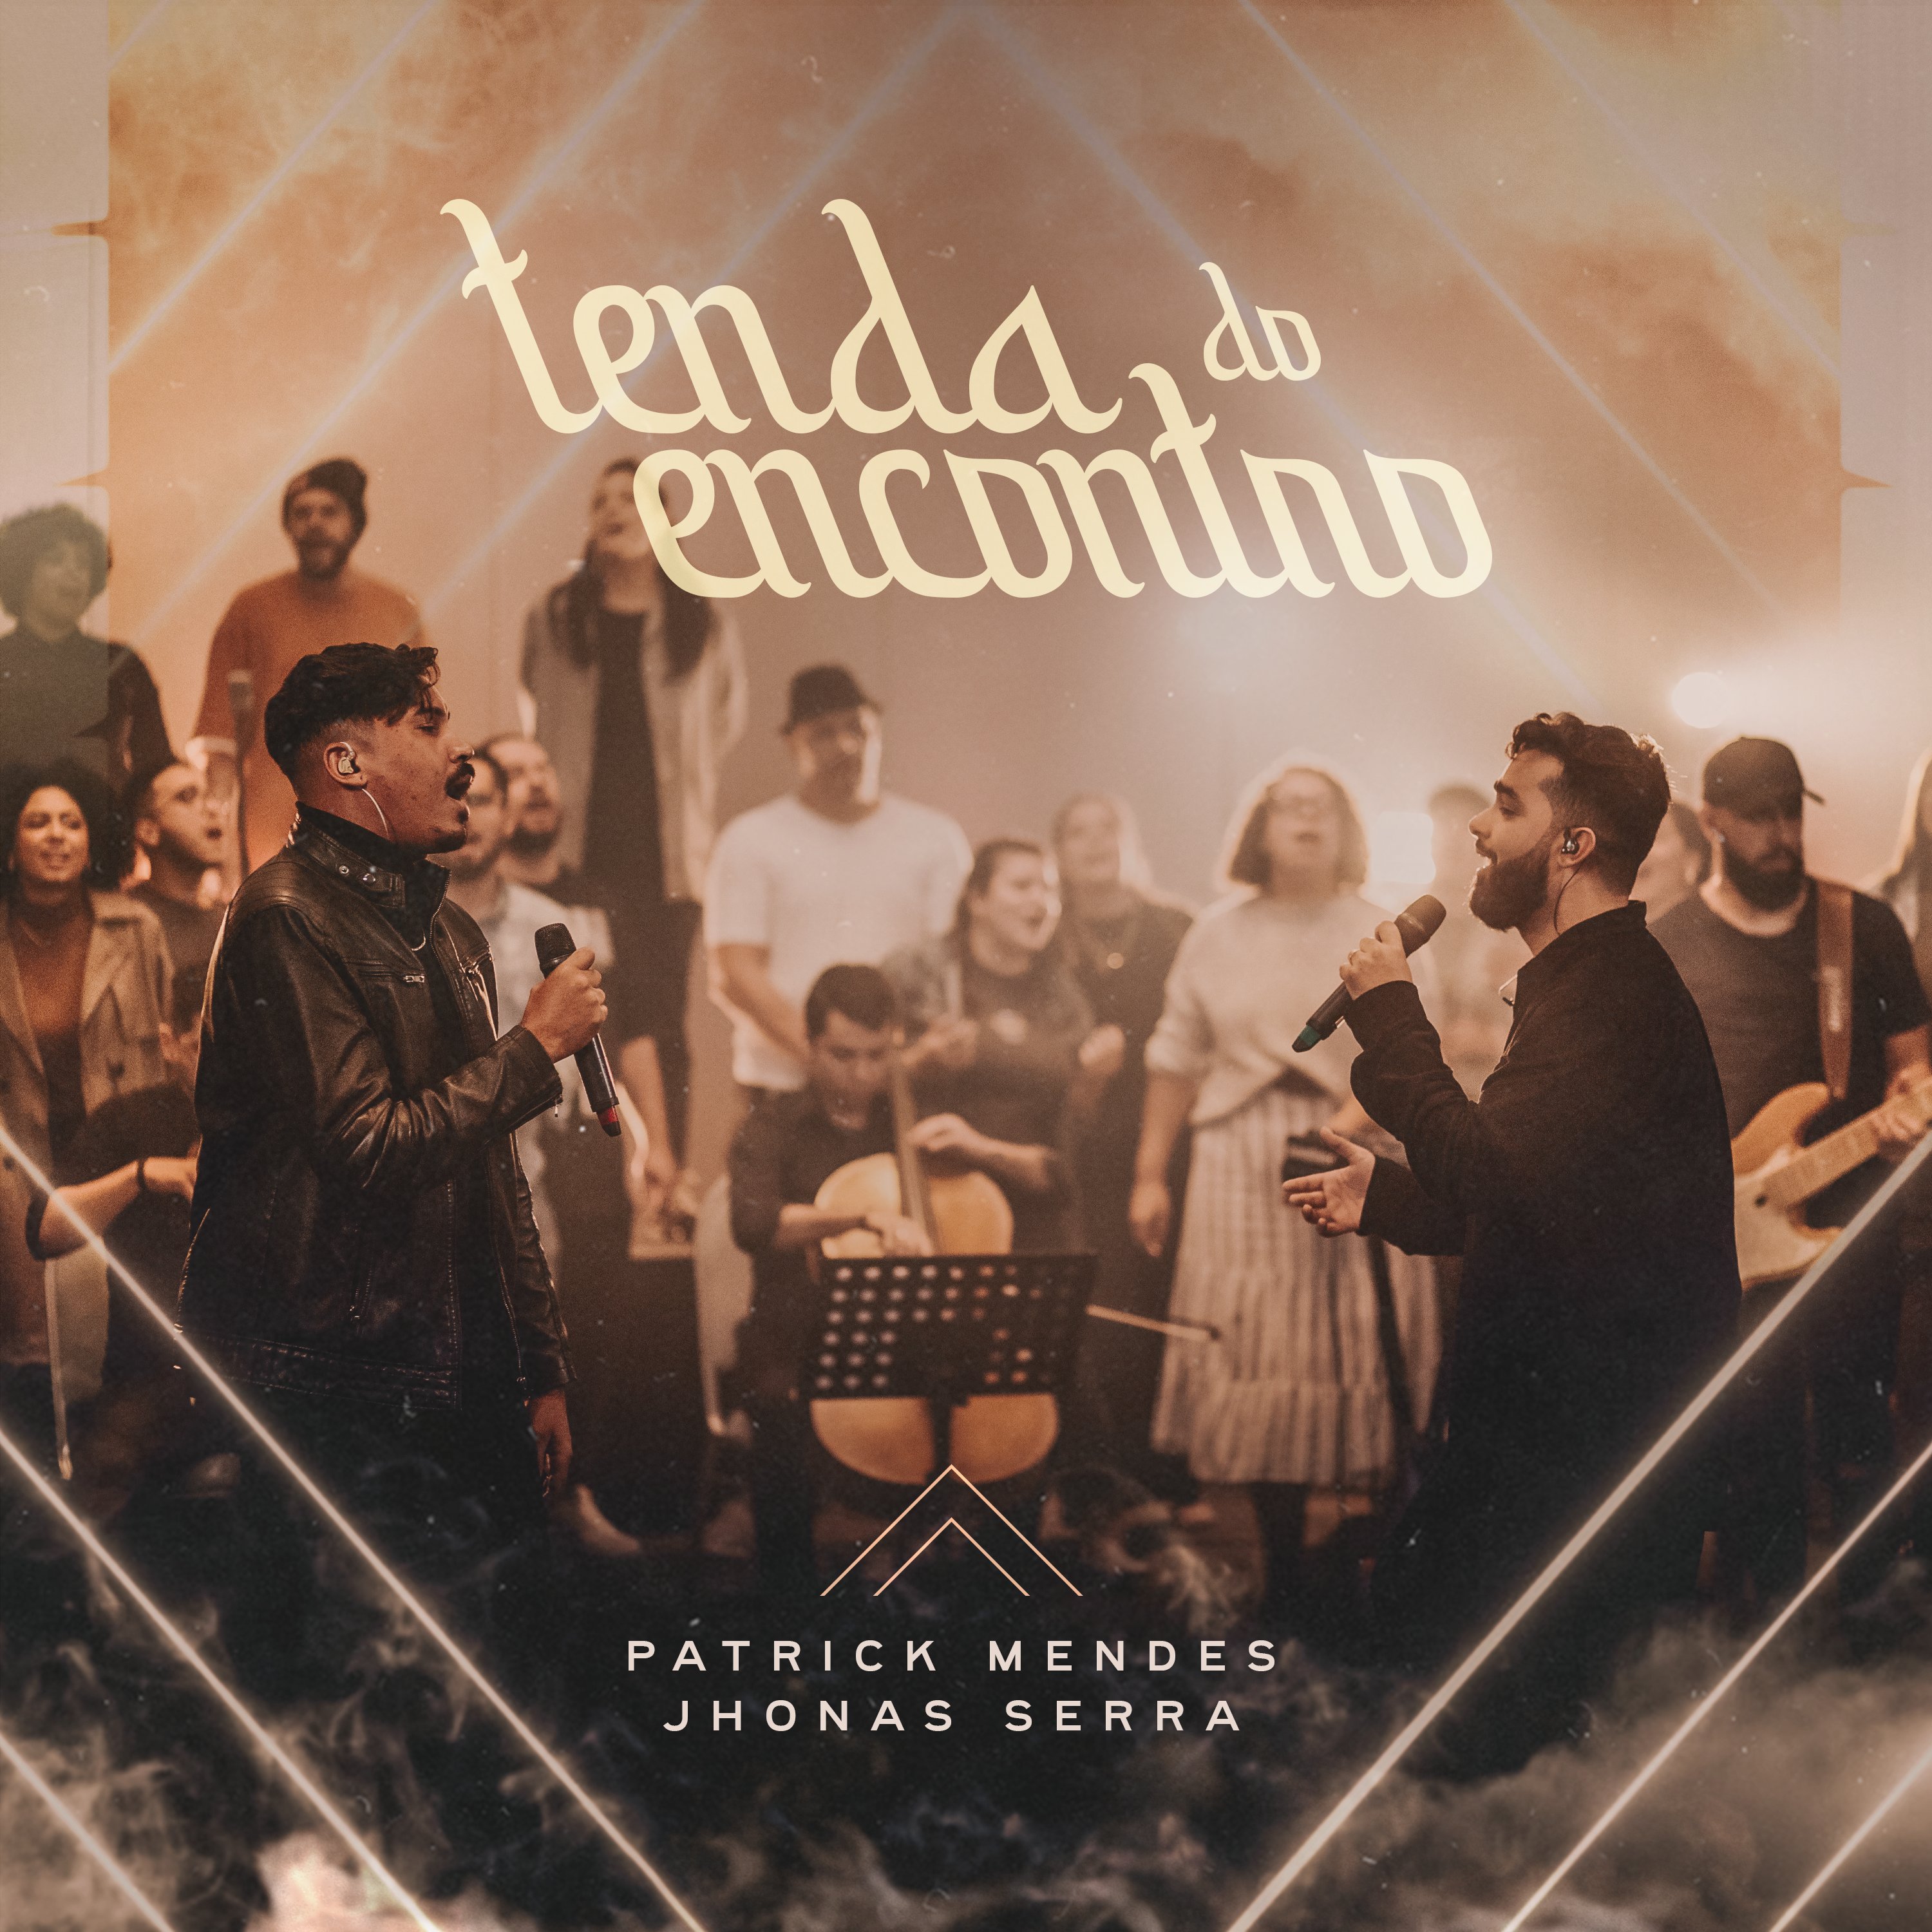 Patrick Mendes lança “Tenda do Encontro” feat. Jhonas Serra